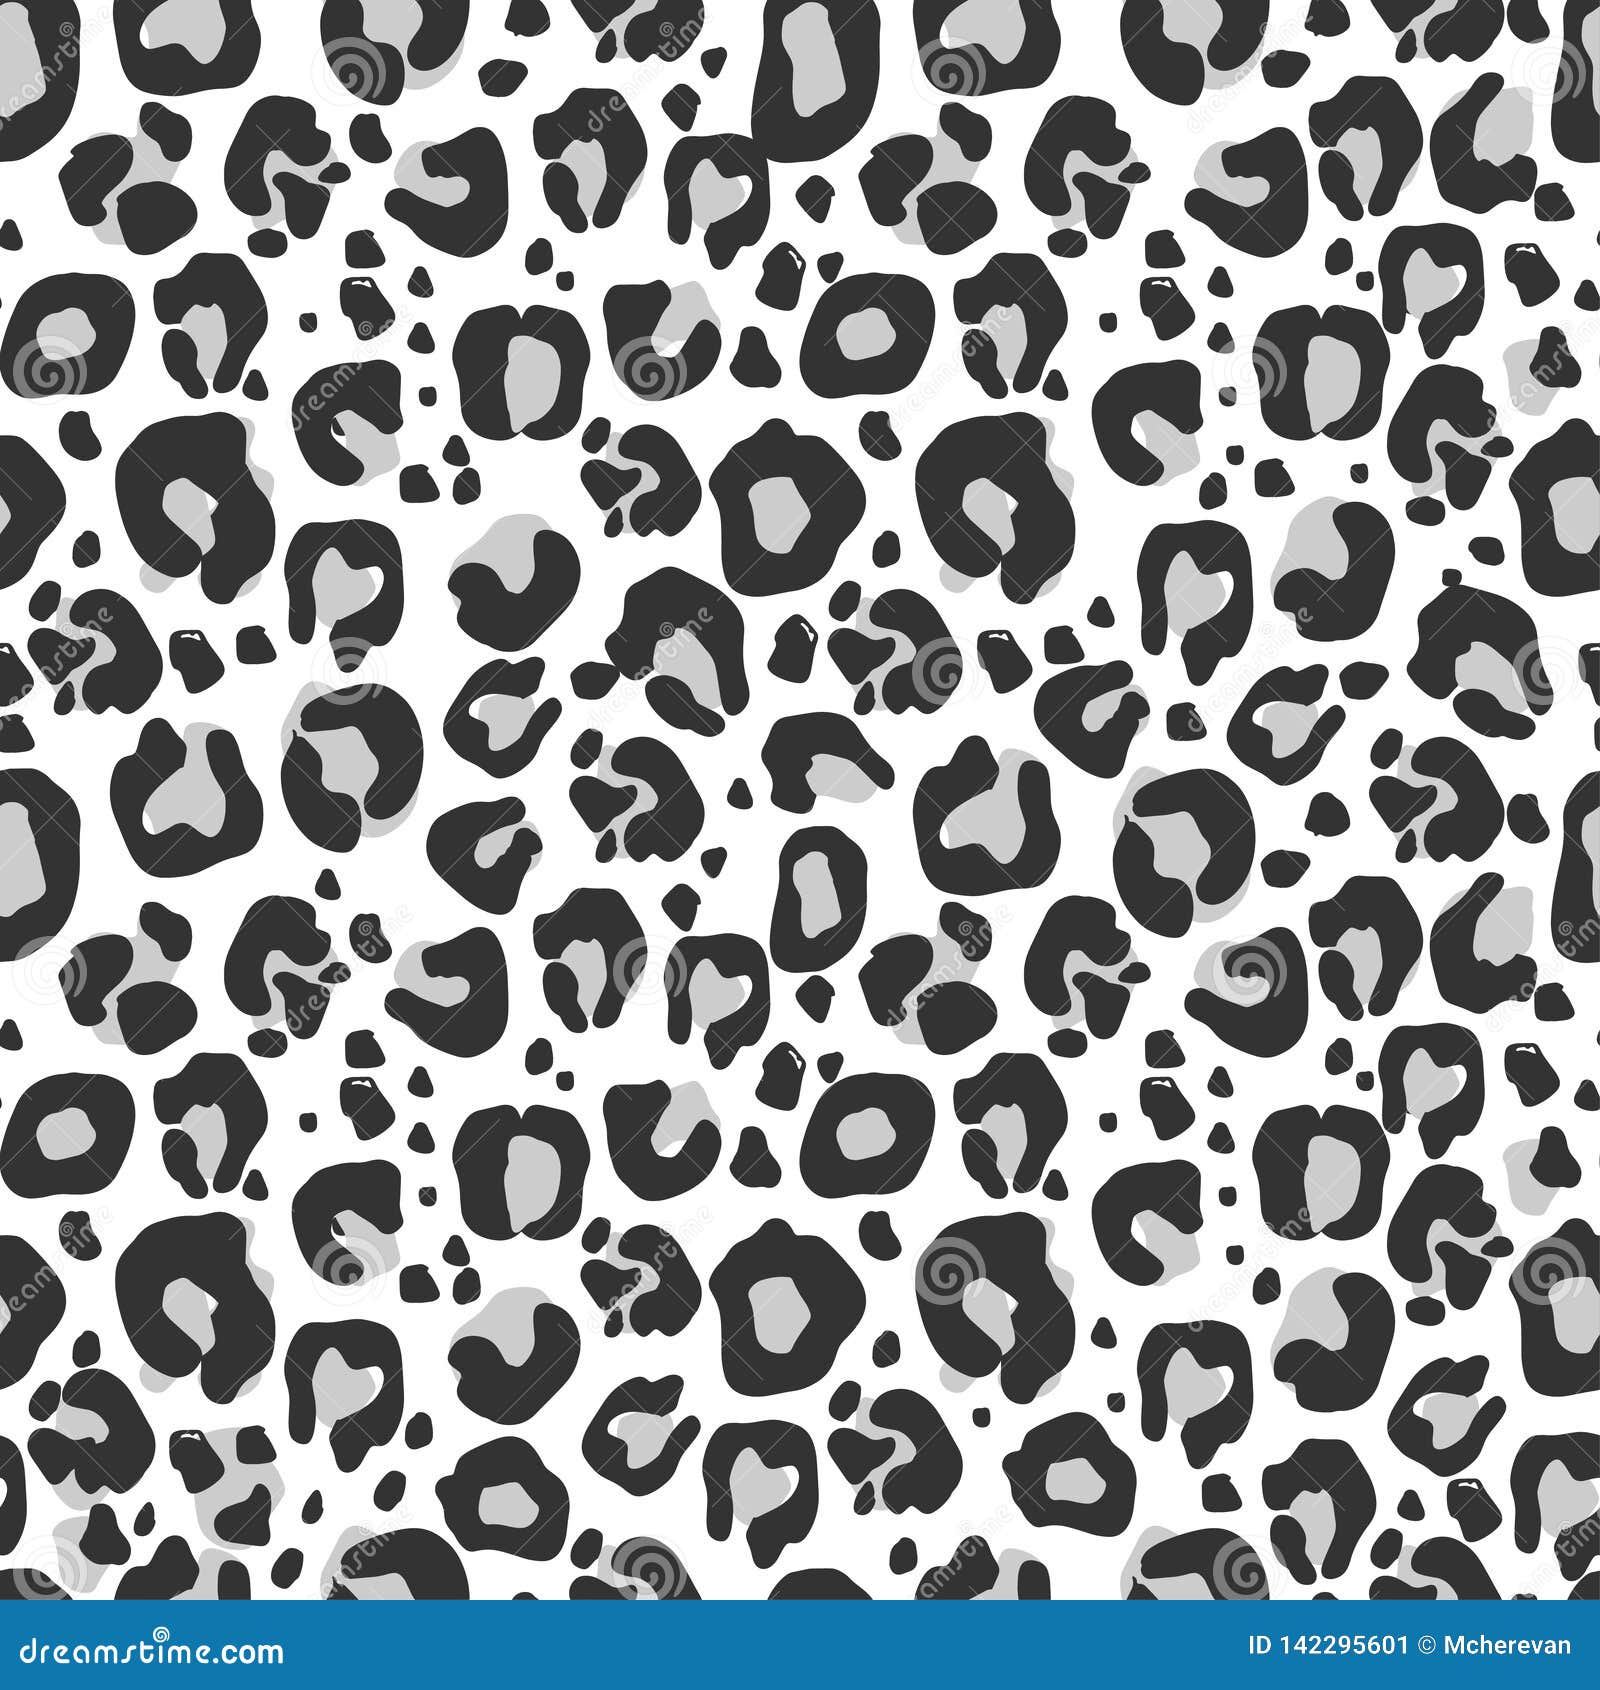 Free download Cheetah Print Iphone Background 640x960 Wallpaper teahubio  640x960 for your Desktop Mobile  Tablet  Explore 29 Cheetah Print  iPhone Wallpapers  Cheetah Print Wallpaper Glitter Cheetah Print Wallpaper  Cheetah